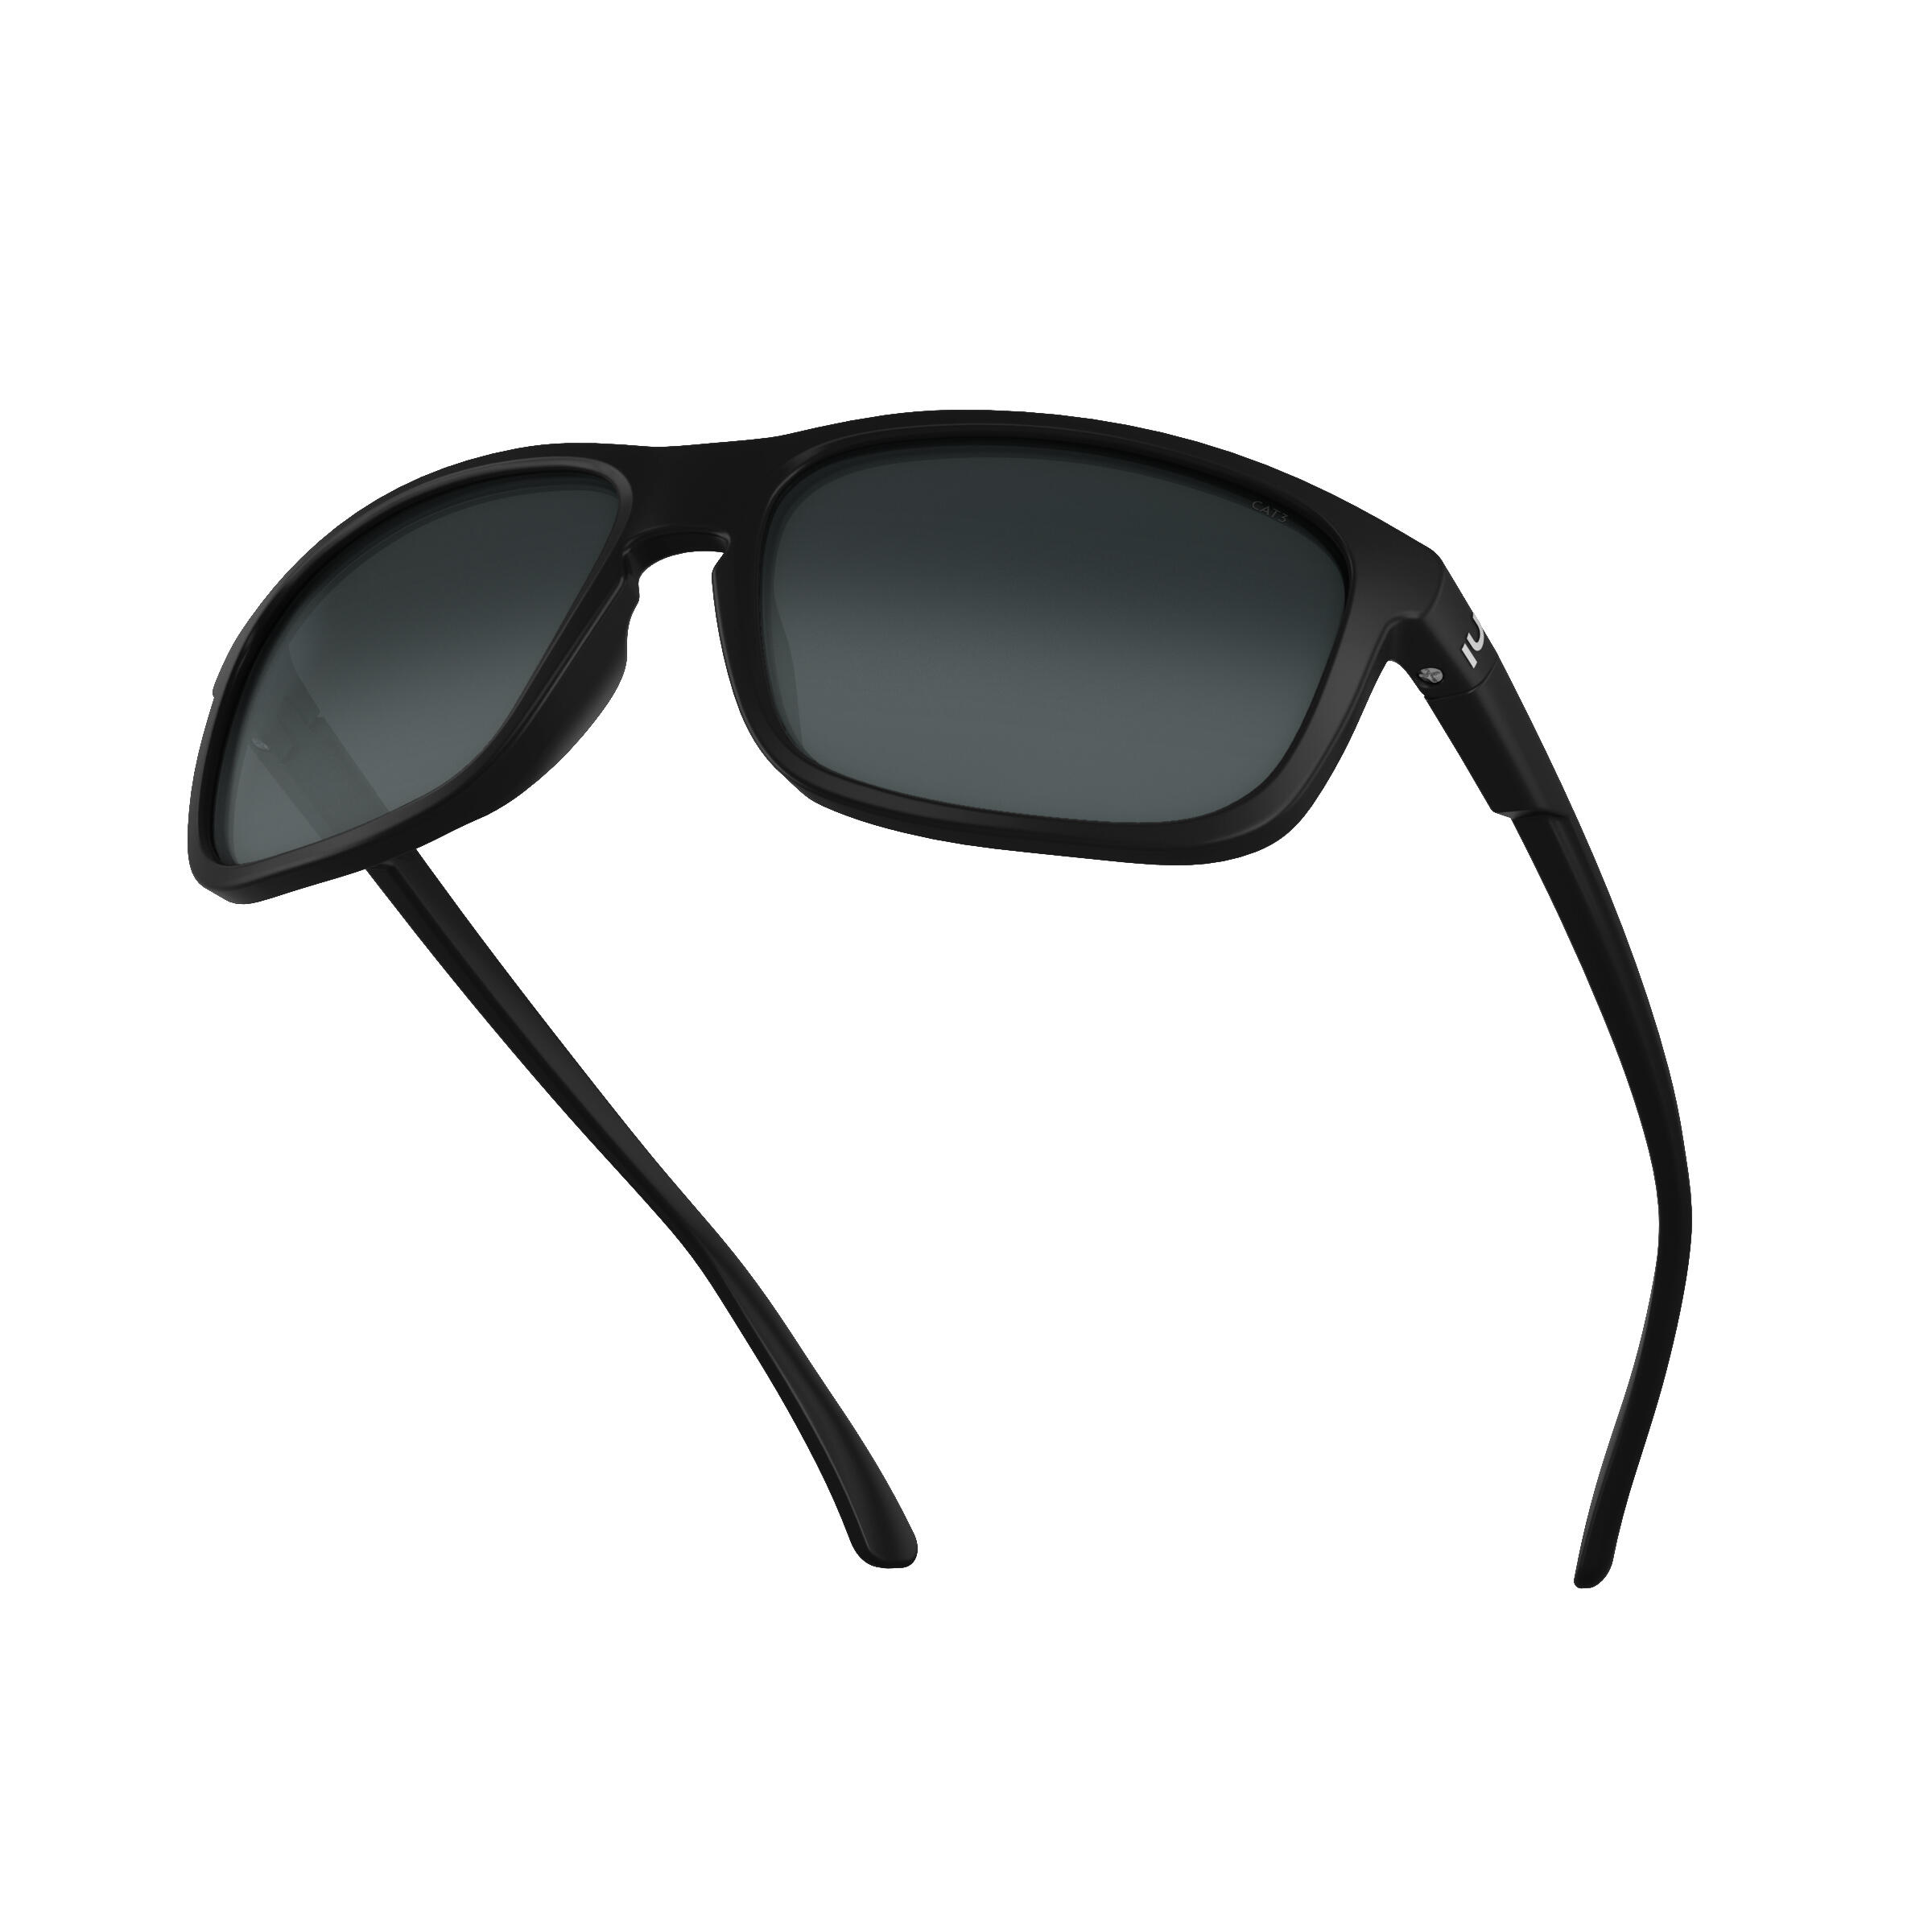 UV Protection Categories | Types of UV Sunglasses | SmartBuyGlasses NZ